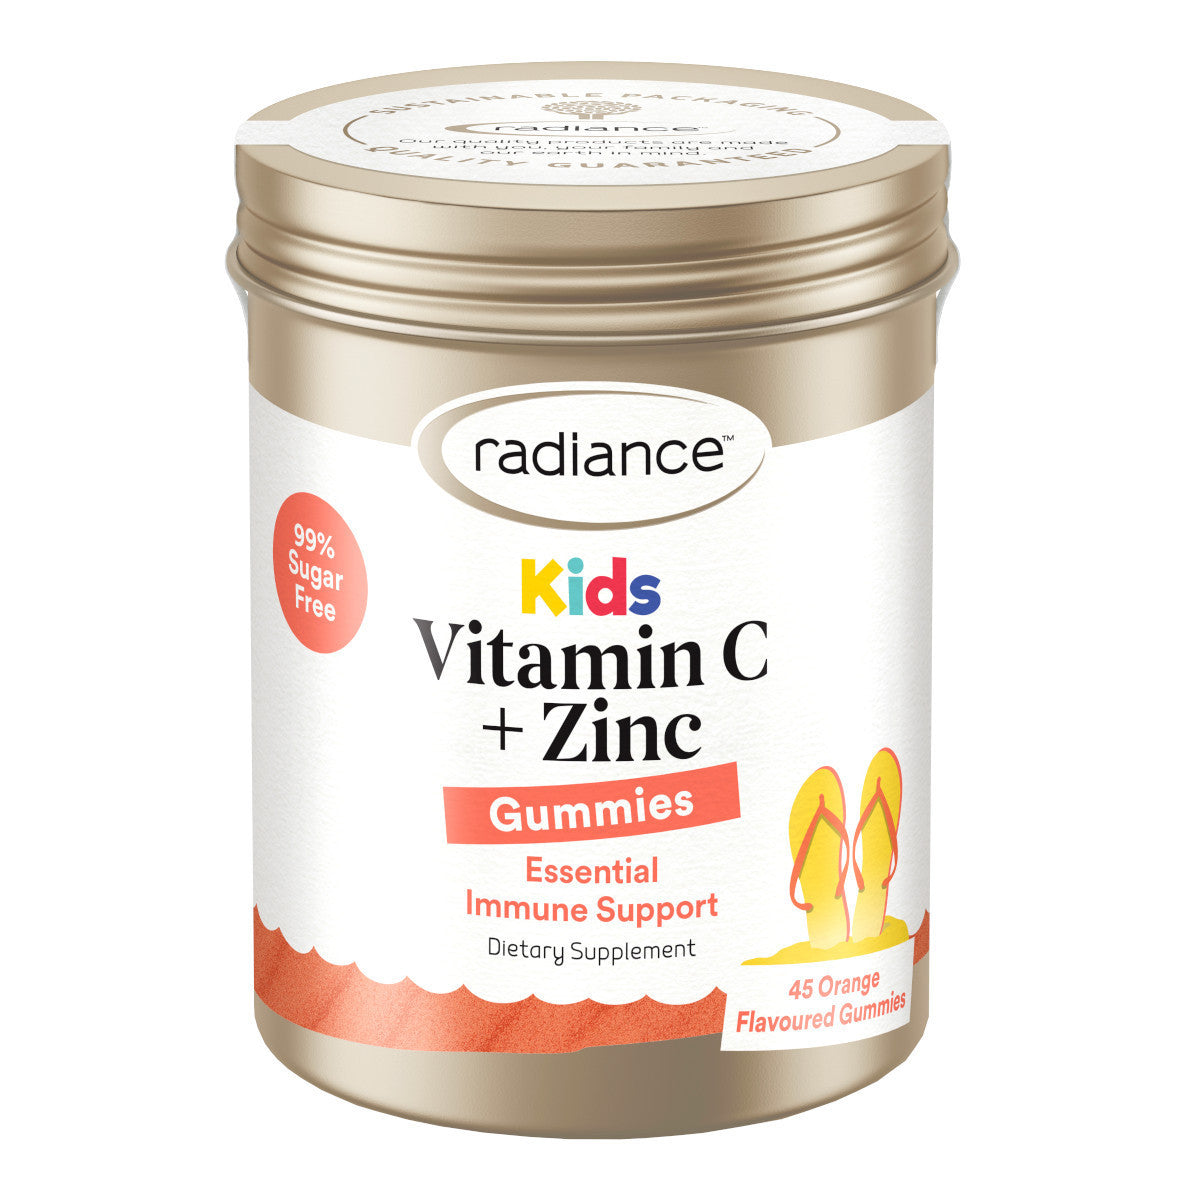 Radiance Kids Vitamin C + Zinc Gummies 45